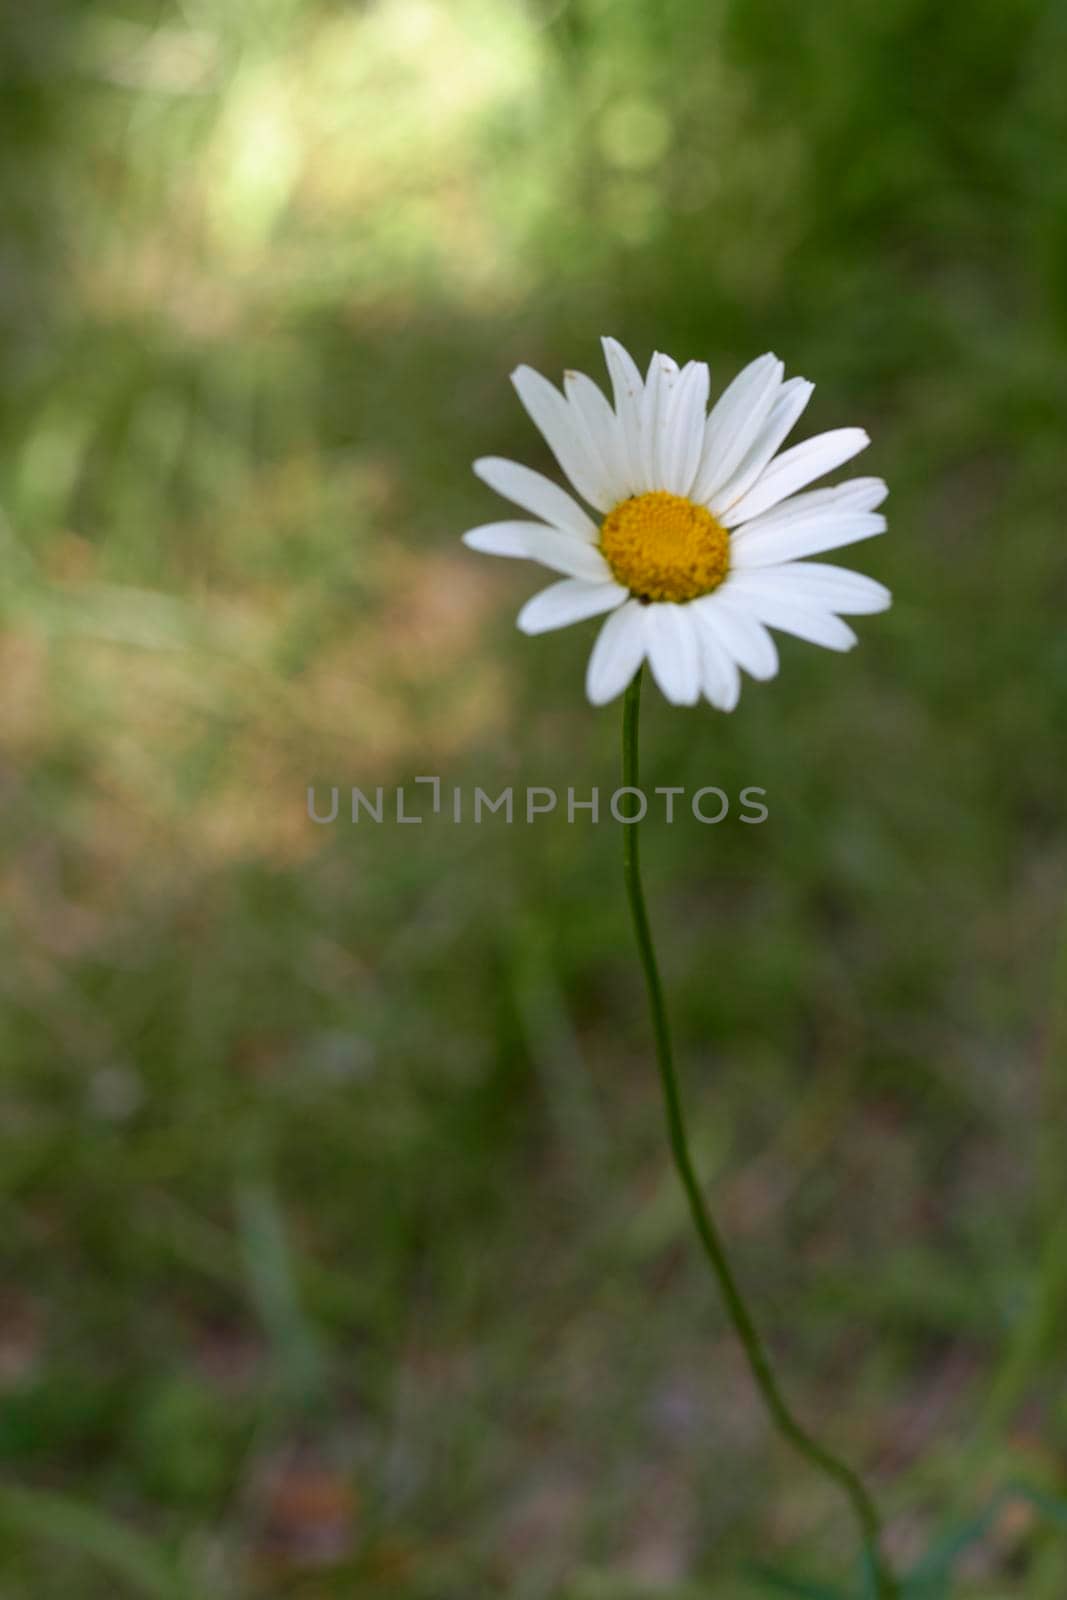 A daisy flower with stem by raul_ruiz